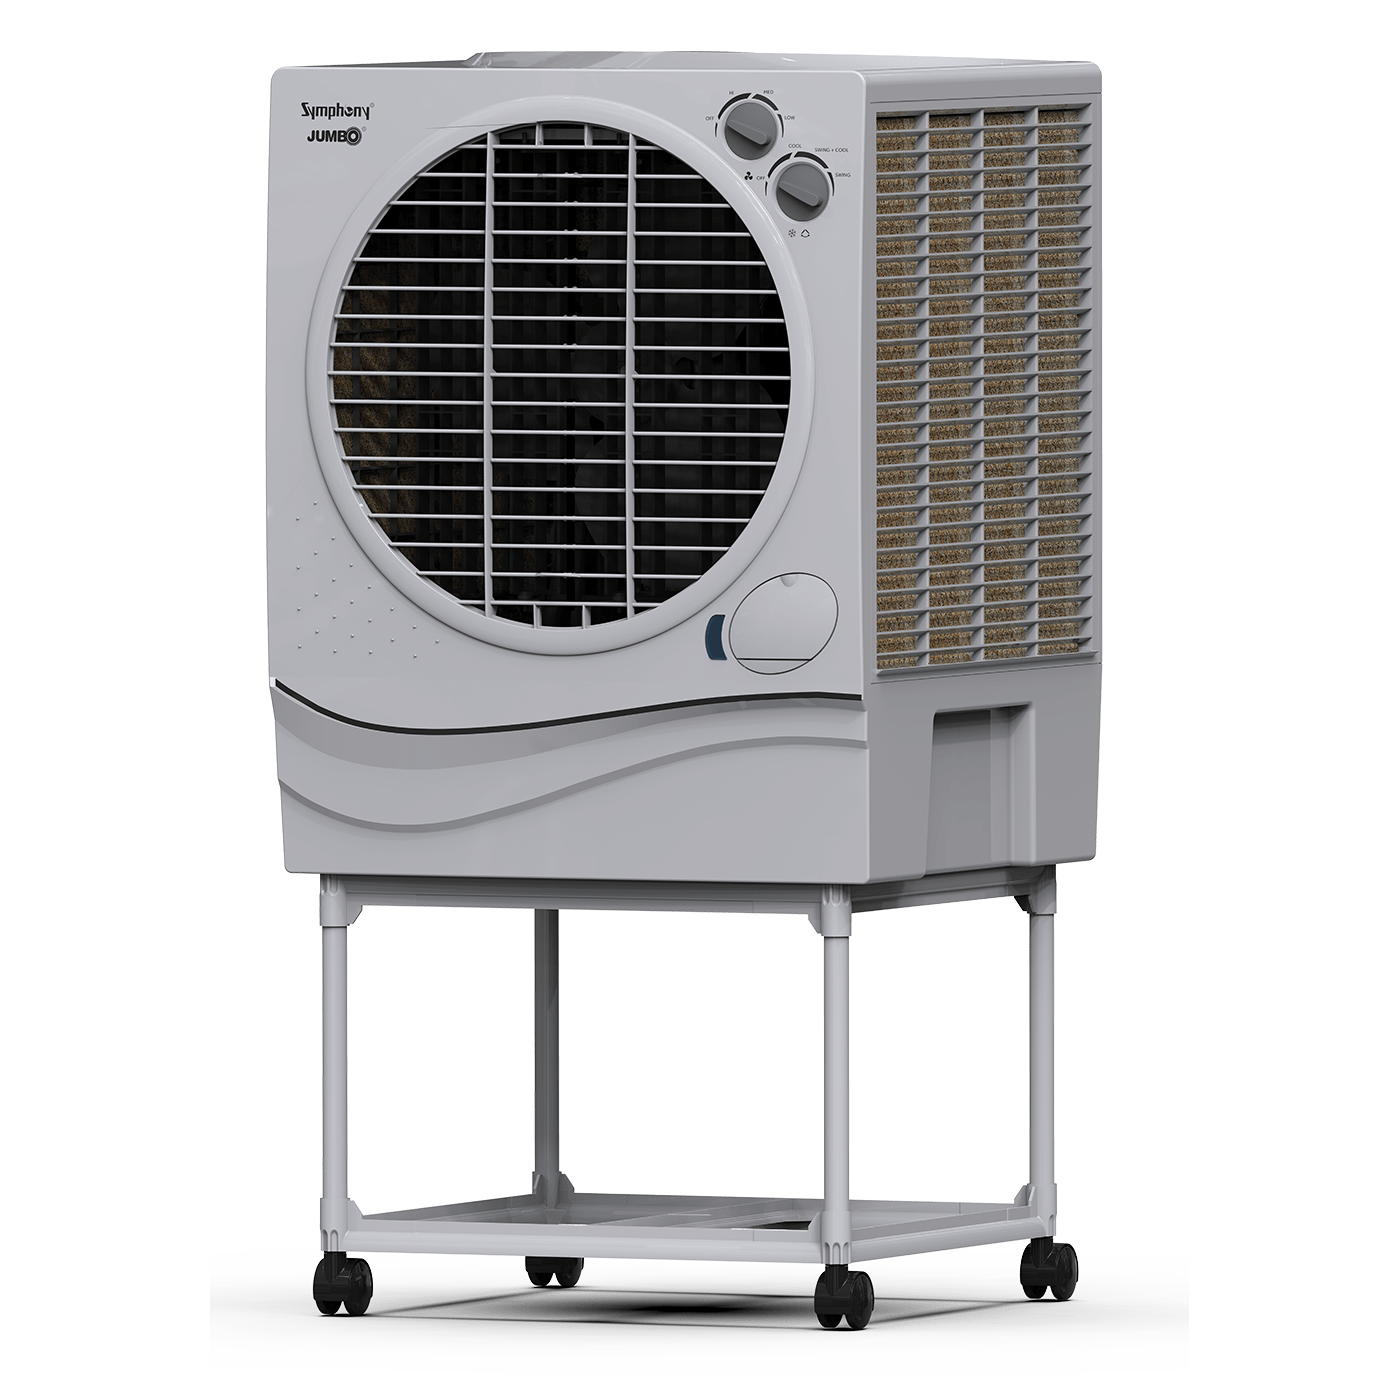 Energy-efficient Jumbo 70 air cooler